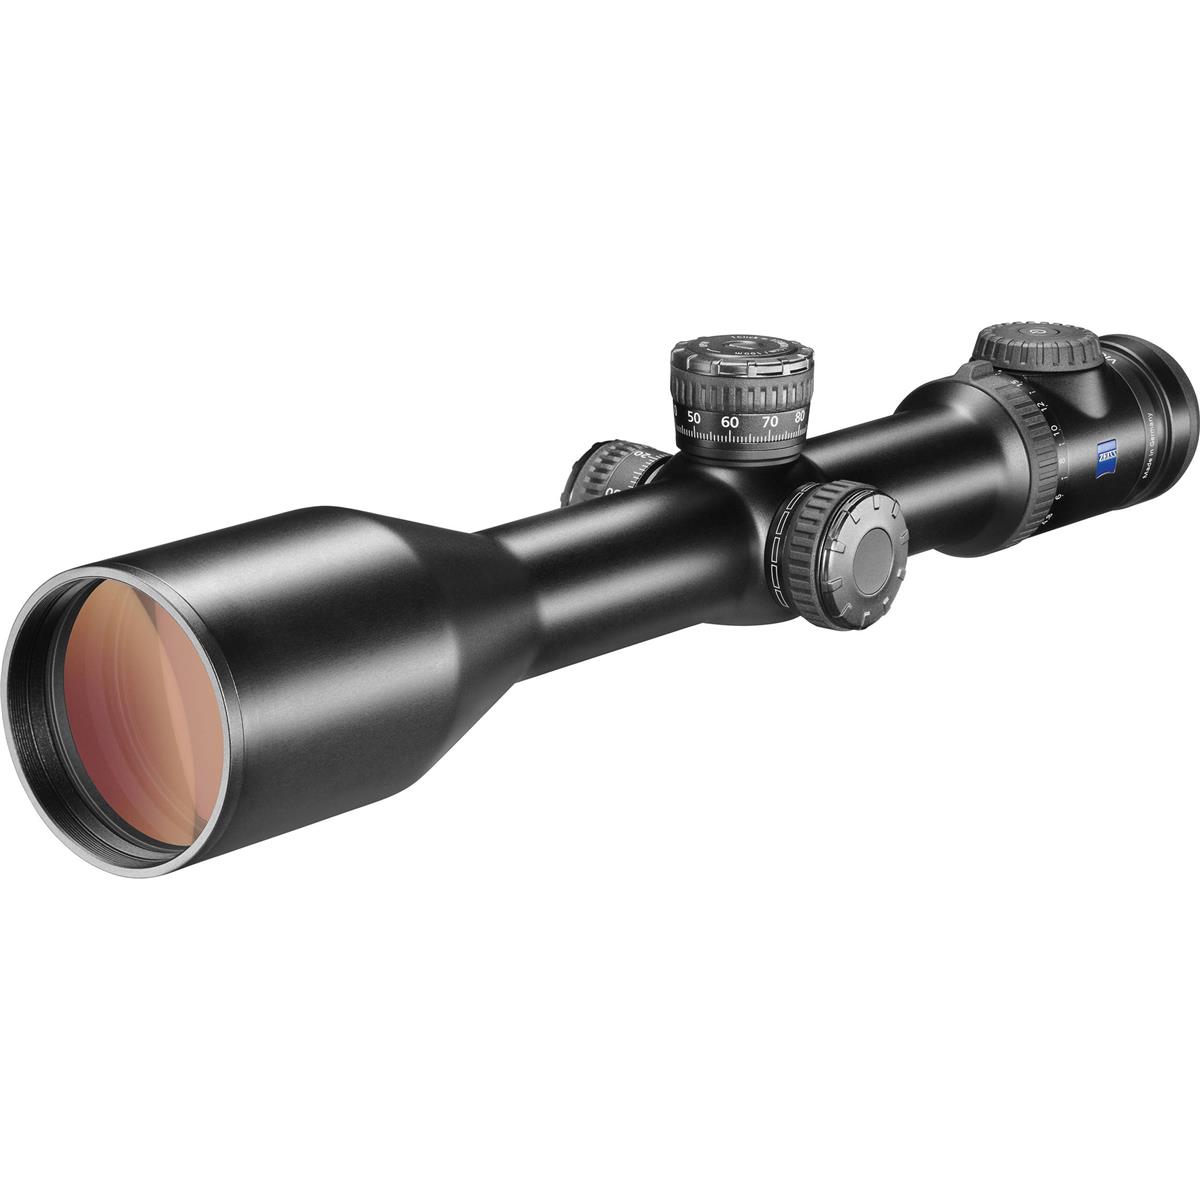 Zeiss 4.8-35x60 Victory V8 Riflescope, Illum 60 Ret, Side Focus, 36mm Tube -  522149-9960-040